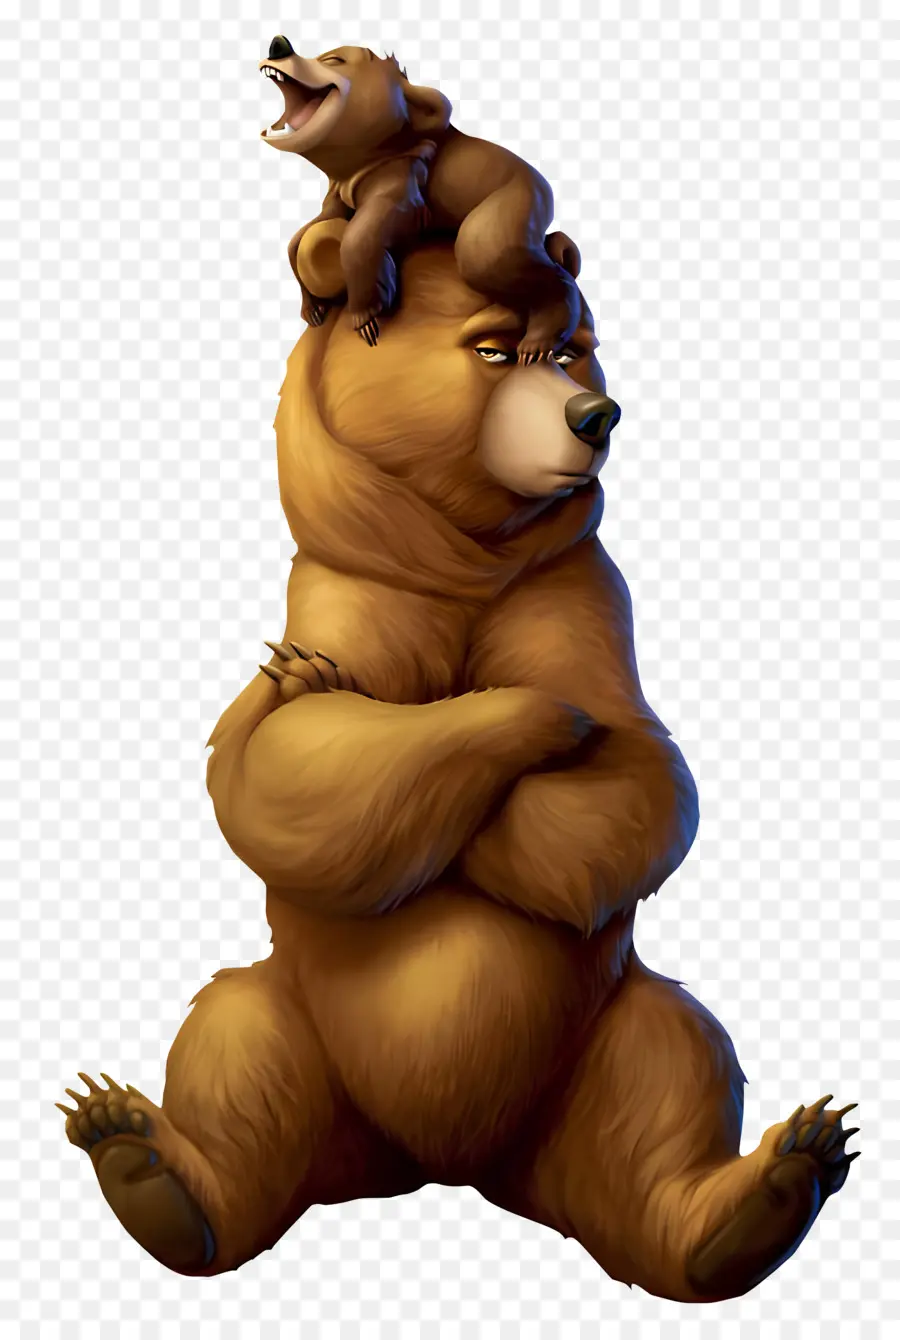 Bär Logo Bears Logo brauner Bären Hinterbeine Arme angehoben - Sitzen brauner Bär mit friedlichen Armen